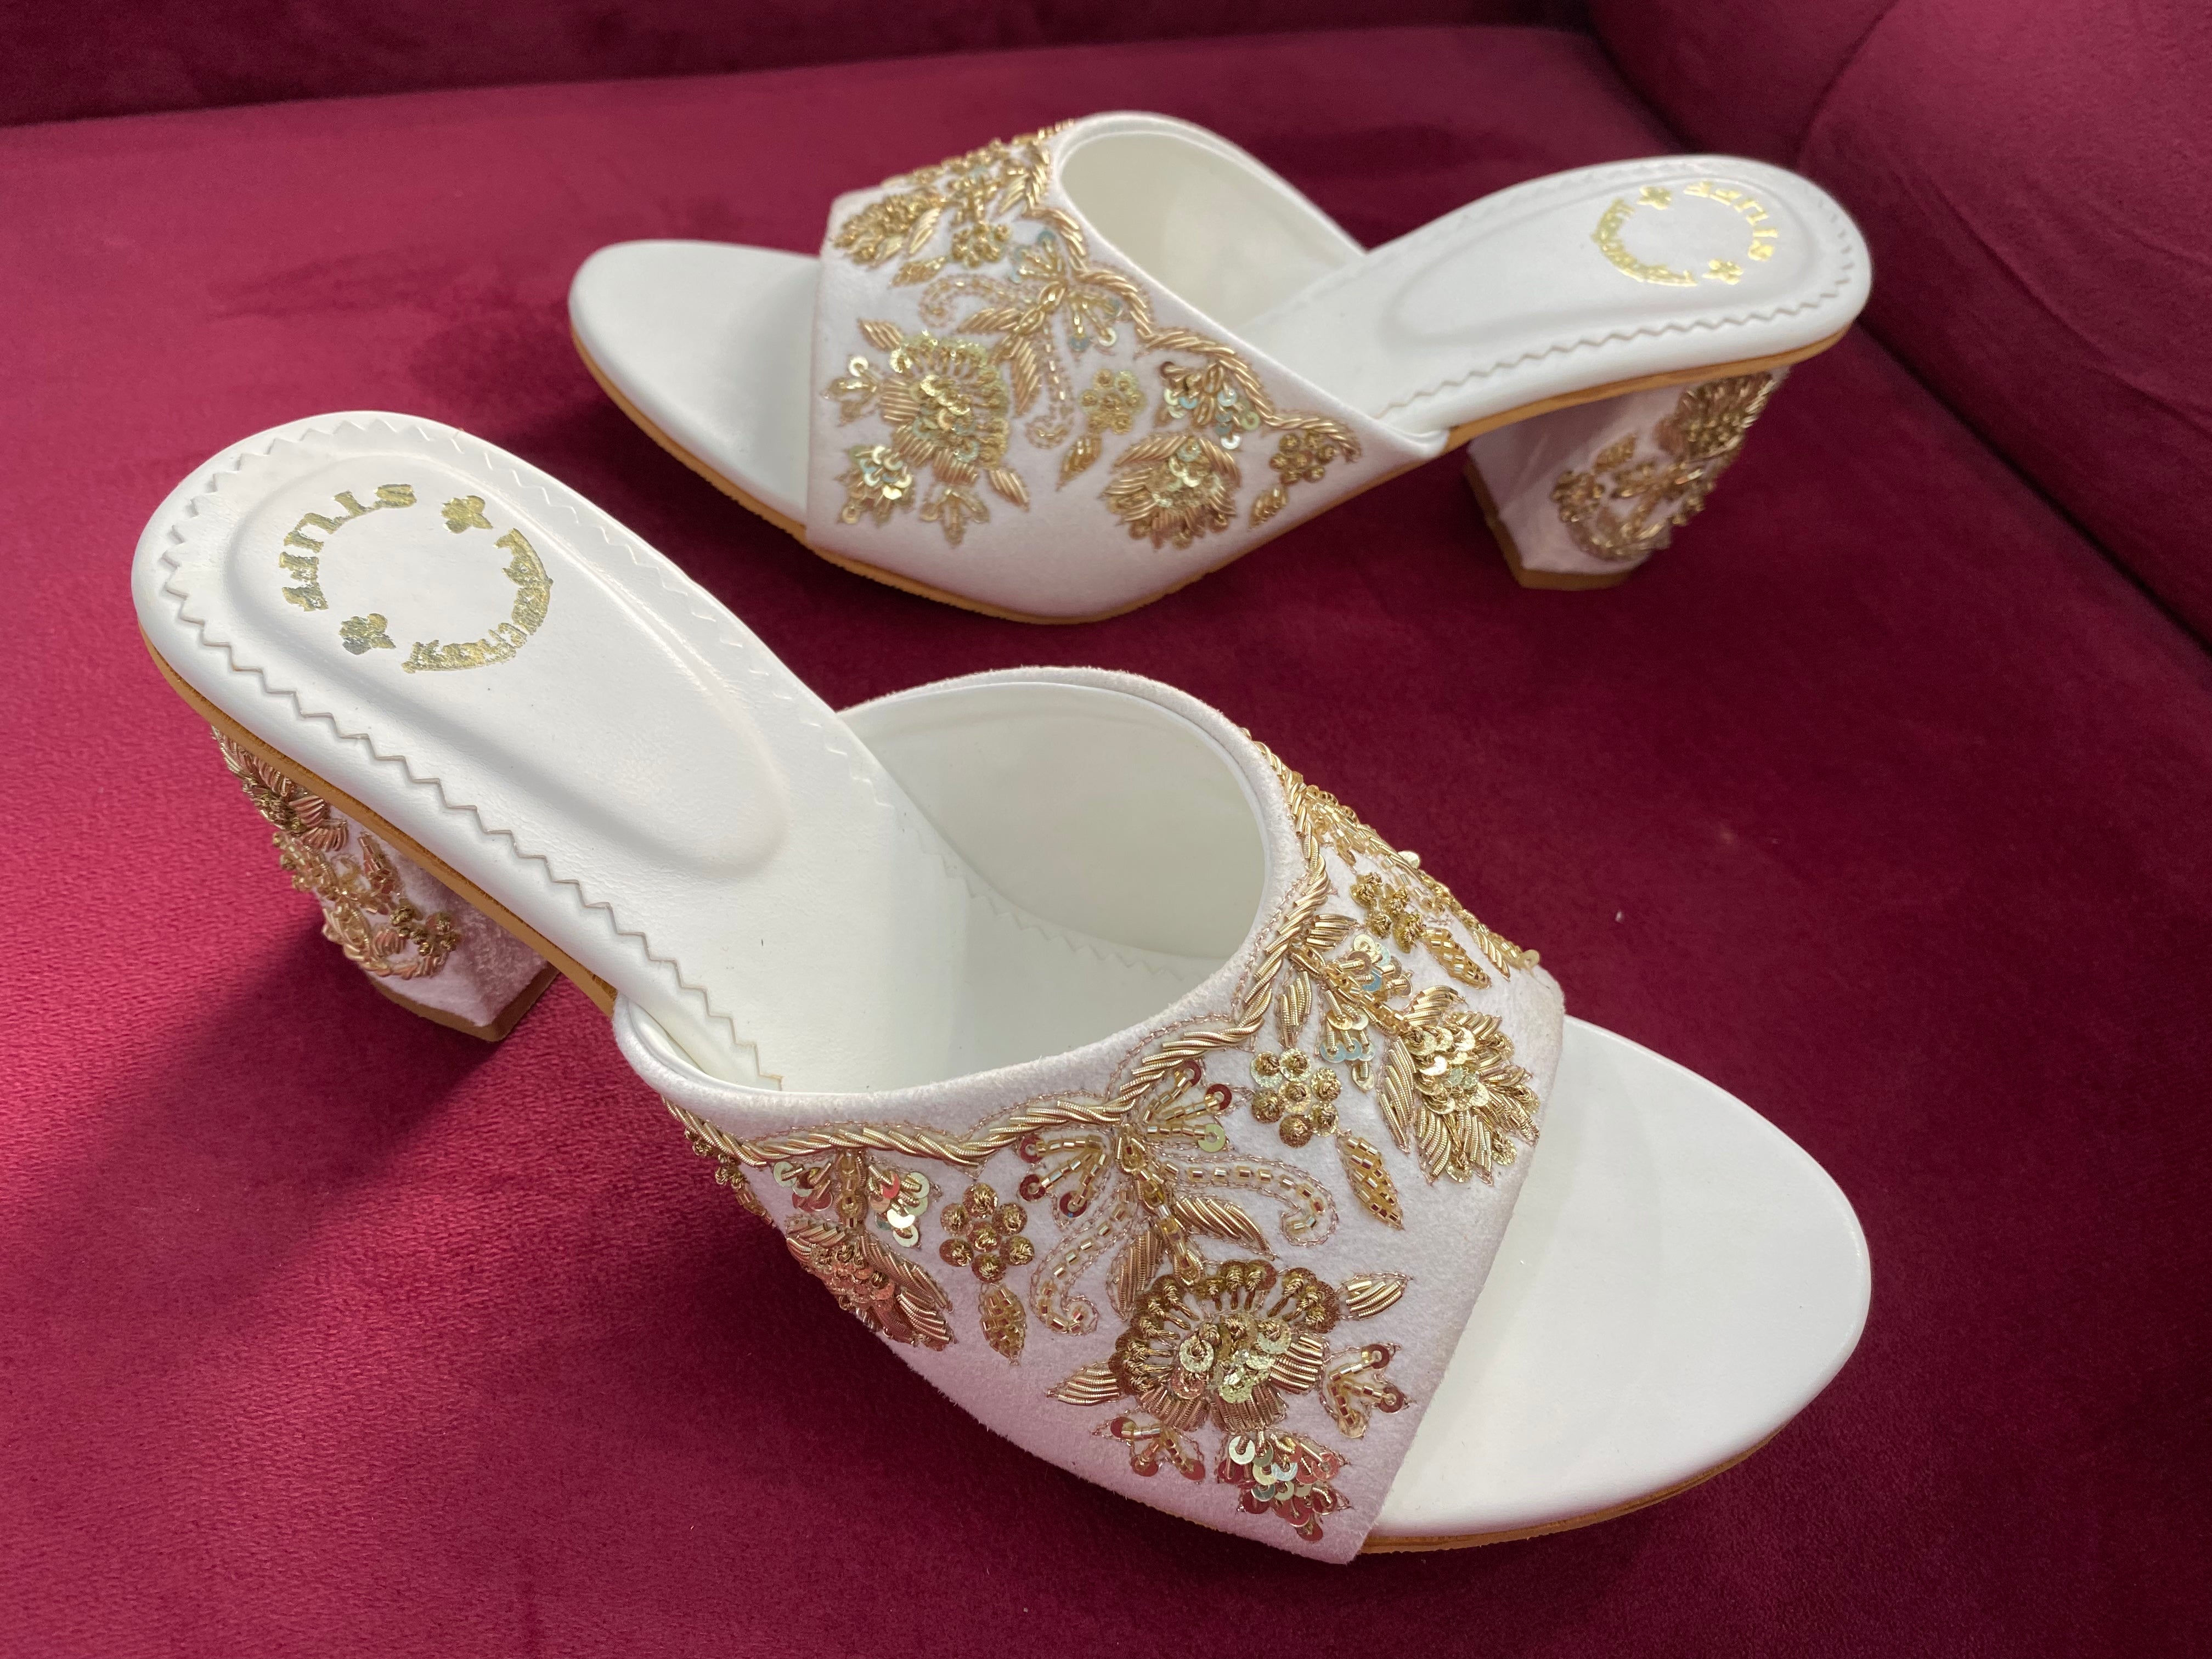 Party Wear Heels Online | Bridal Heels Online India | Flat Sandals for  Women | Loafer Women's Shoes by Oceedee - Issuu